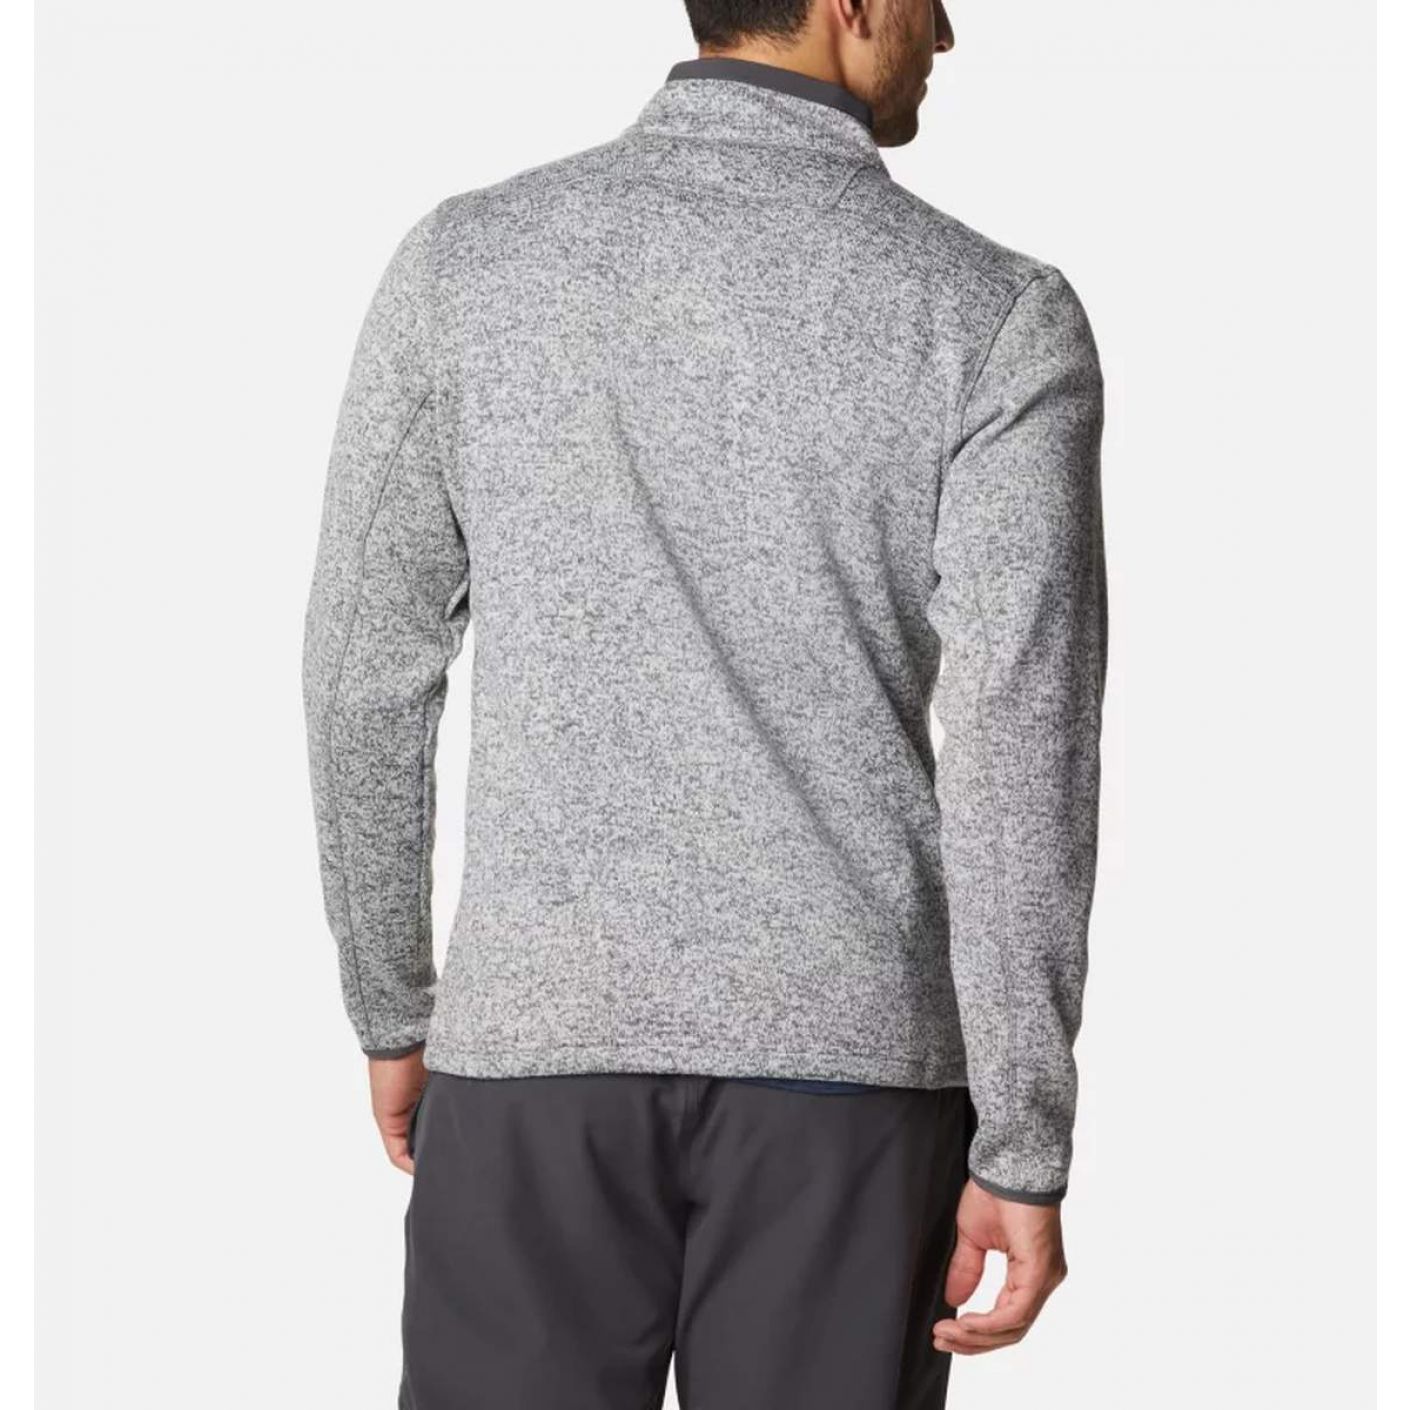 Columbia Giacca Sweater Weather City Grey Heather da Uomo Full Zip